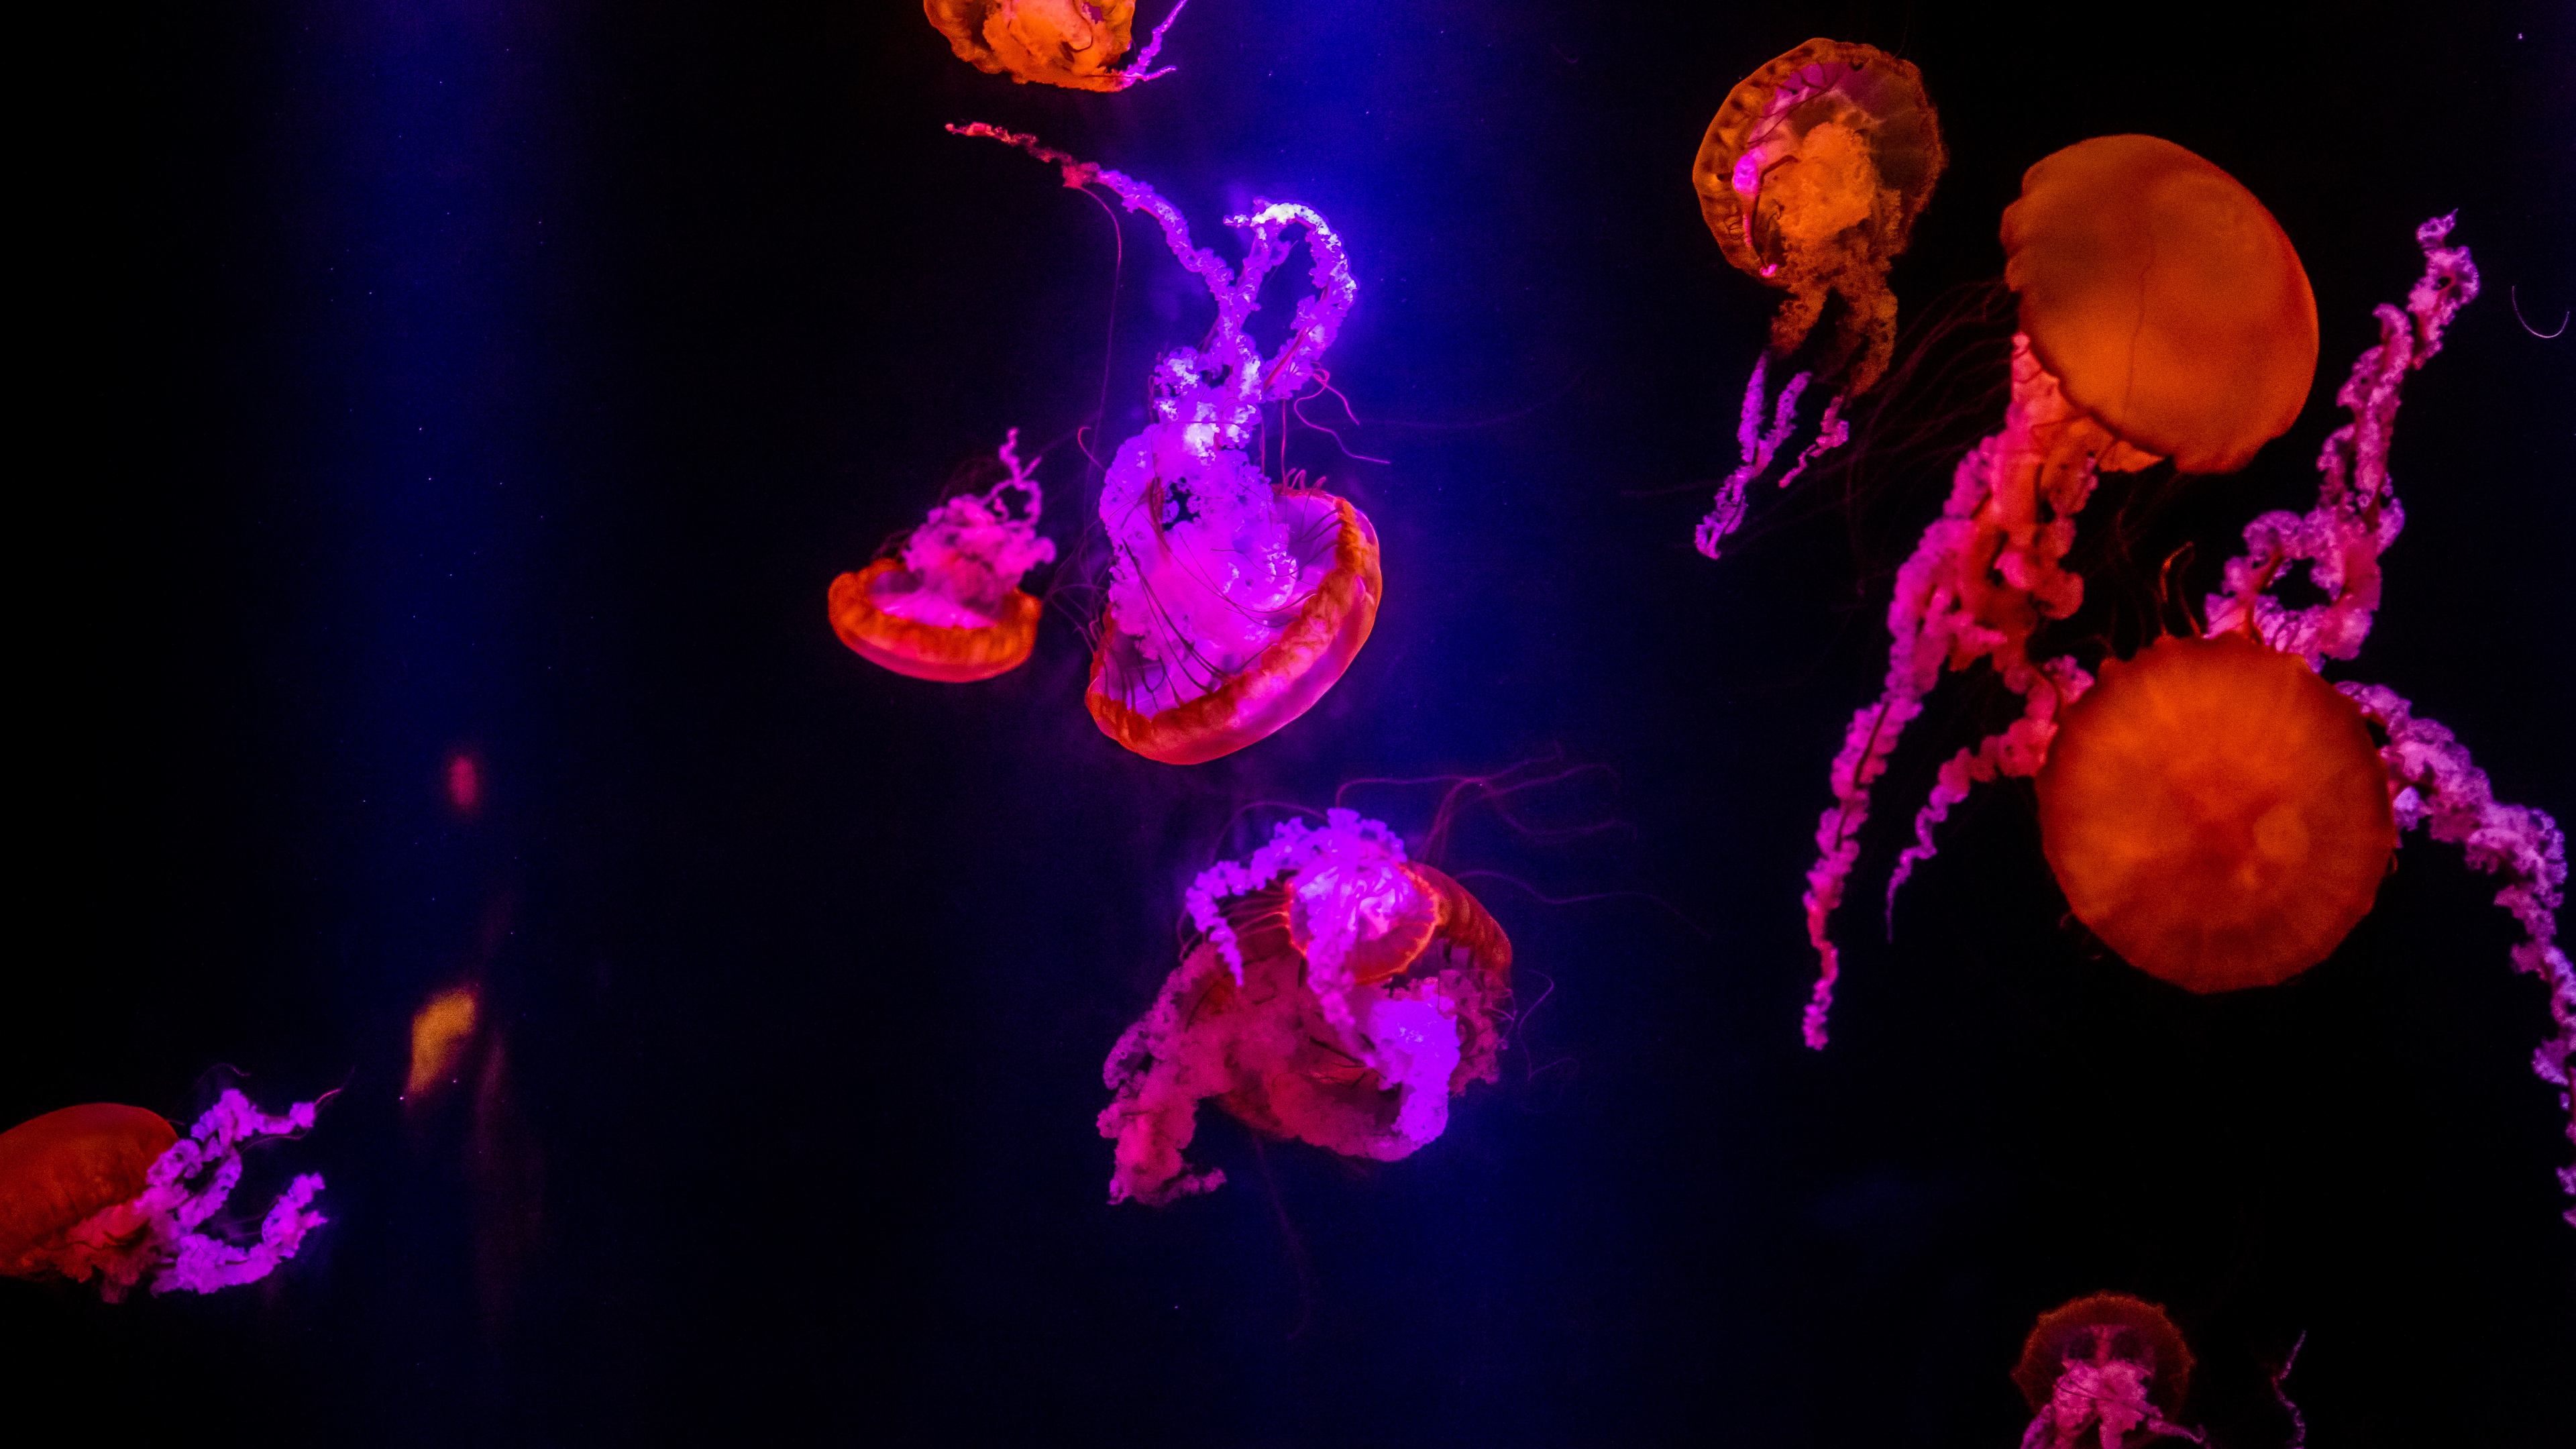 Download wallpaper 3840x2160 jellyfish, underwater, orange glow, pink 4k wallpaper, uhd wallpaper, 16:9 widescreen 3840x2160 HD background, 22980